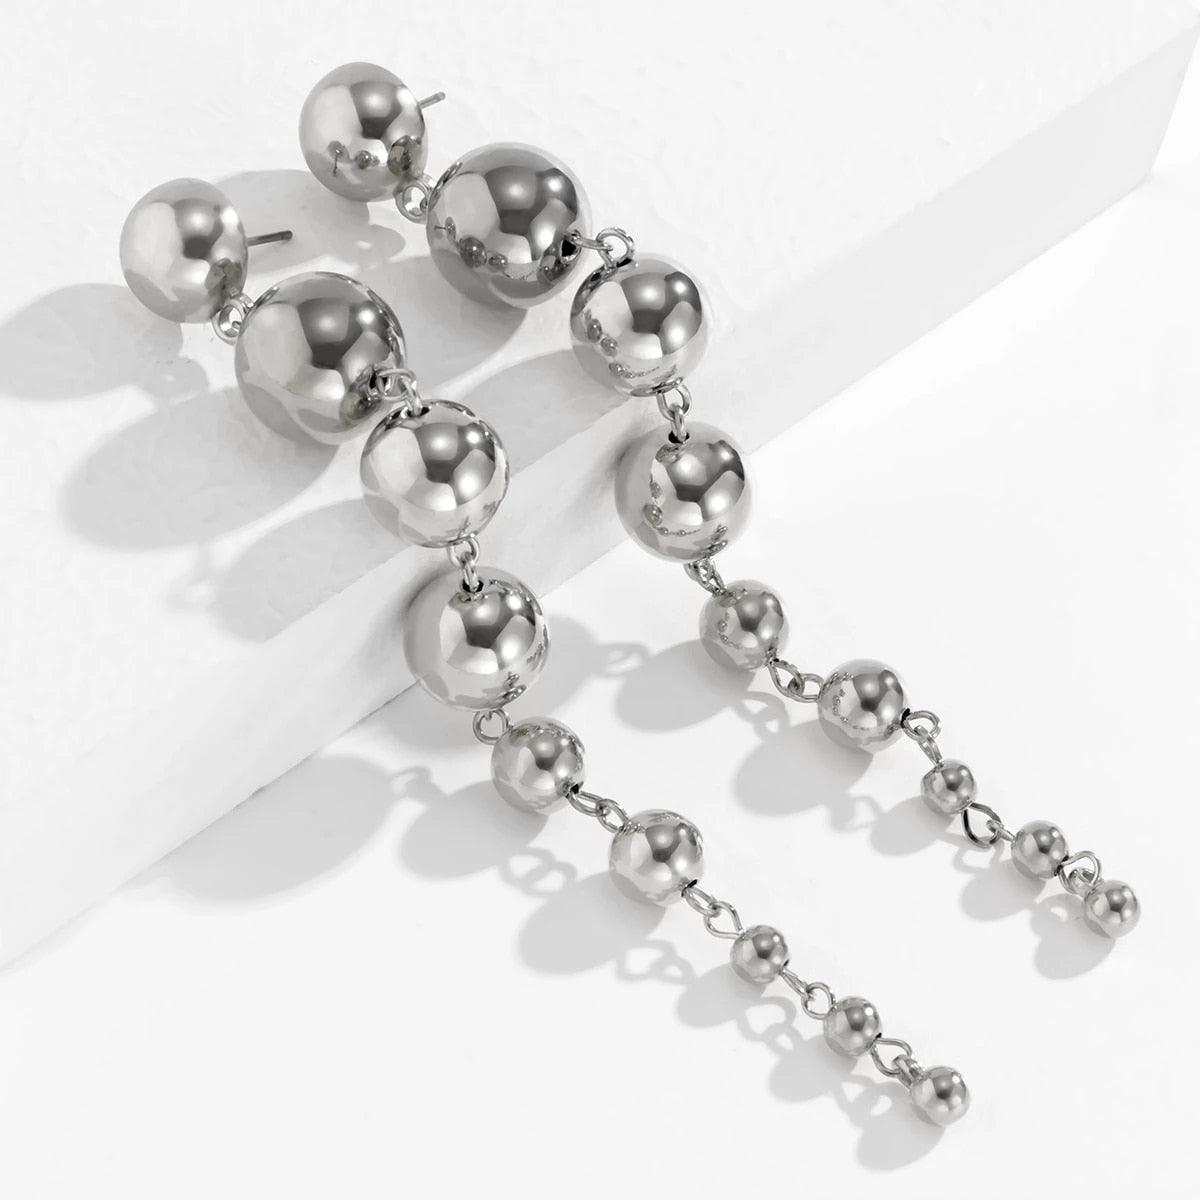 Long Dangle Beads Earrings from The House of CO-KY - Earrings